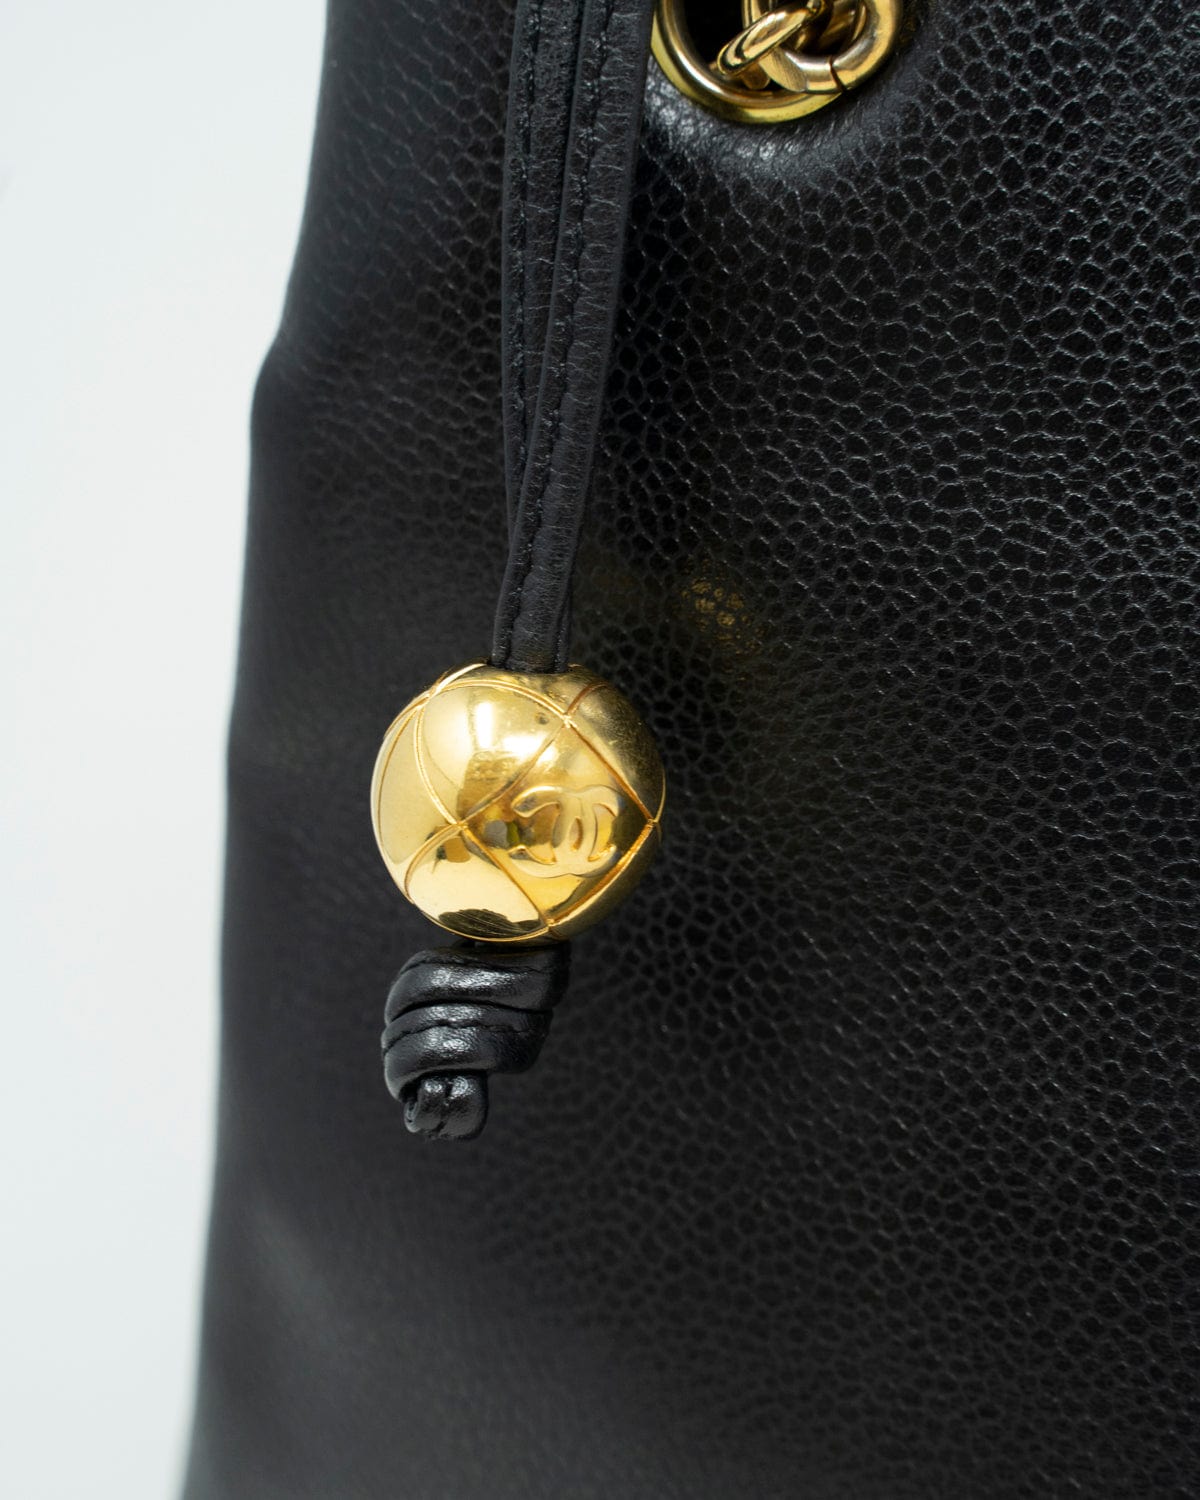 Chanel Vintage Chanel Black Caviar CC Shoulder Bag - AWL2261